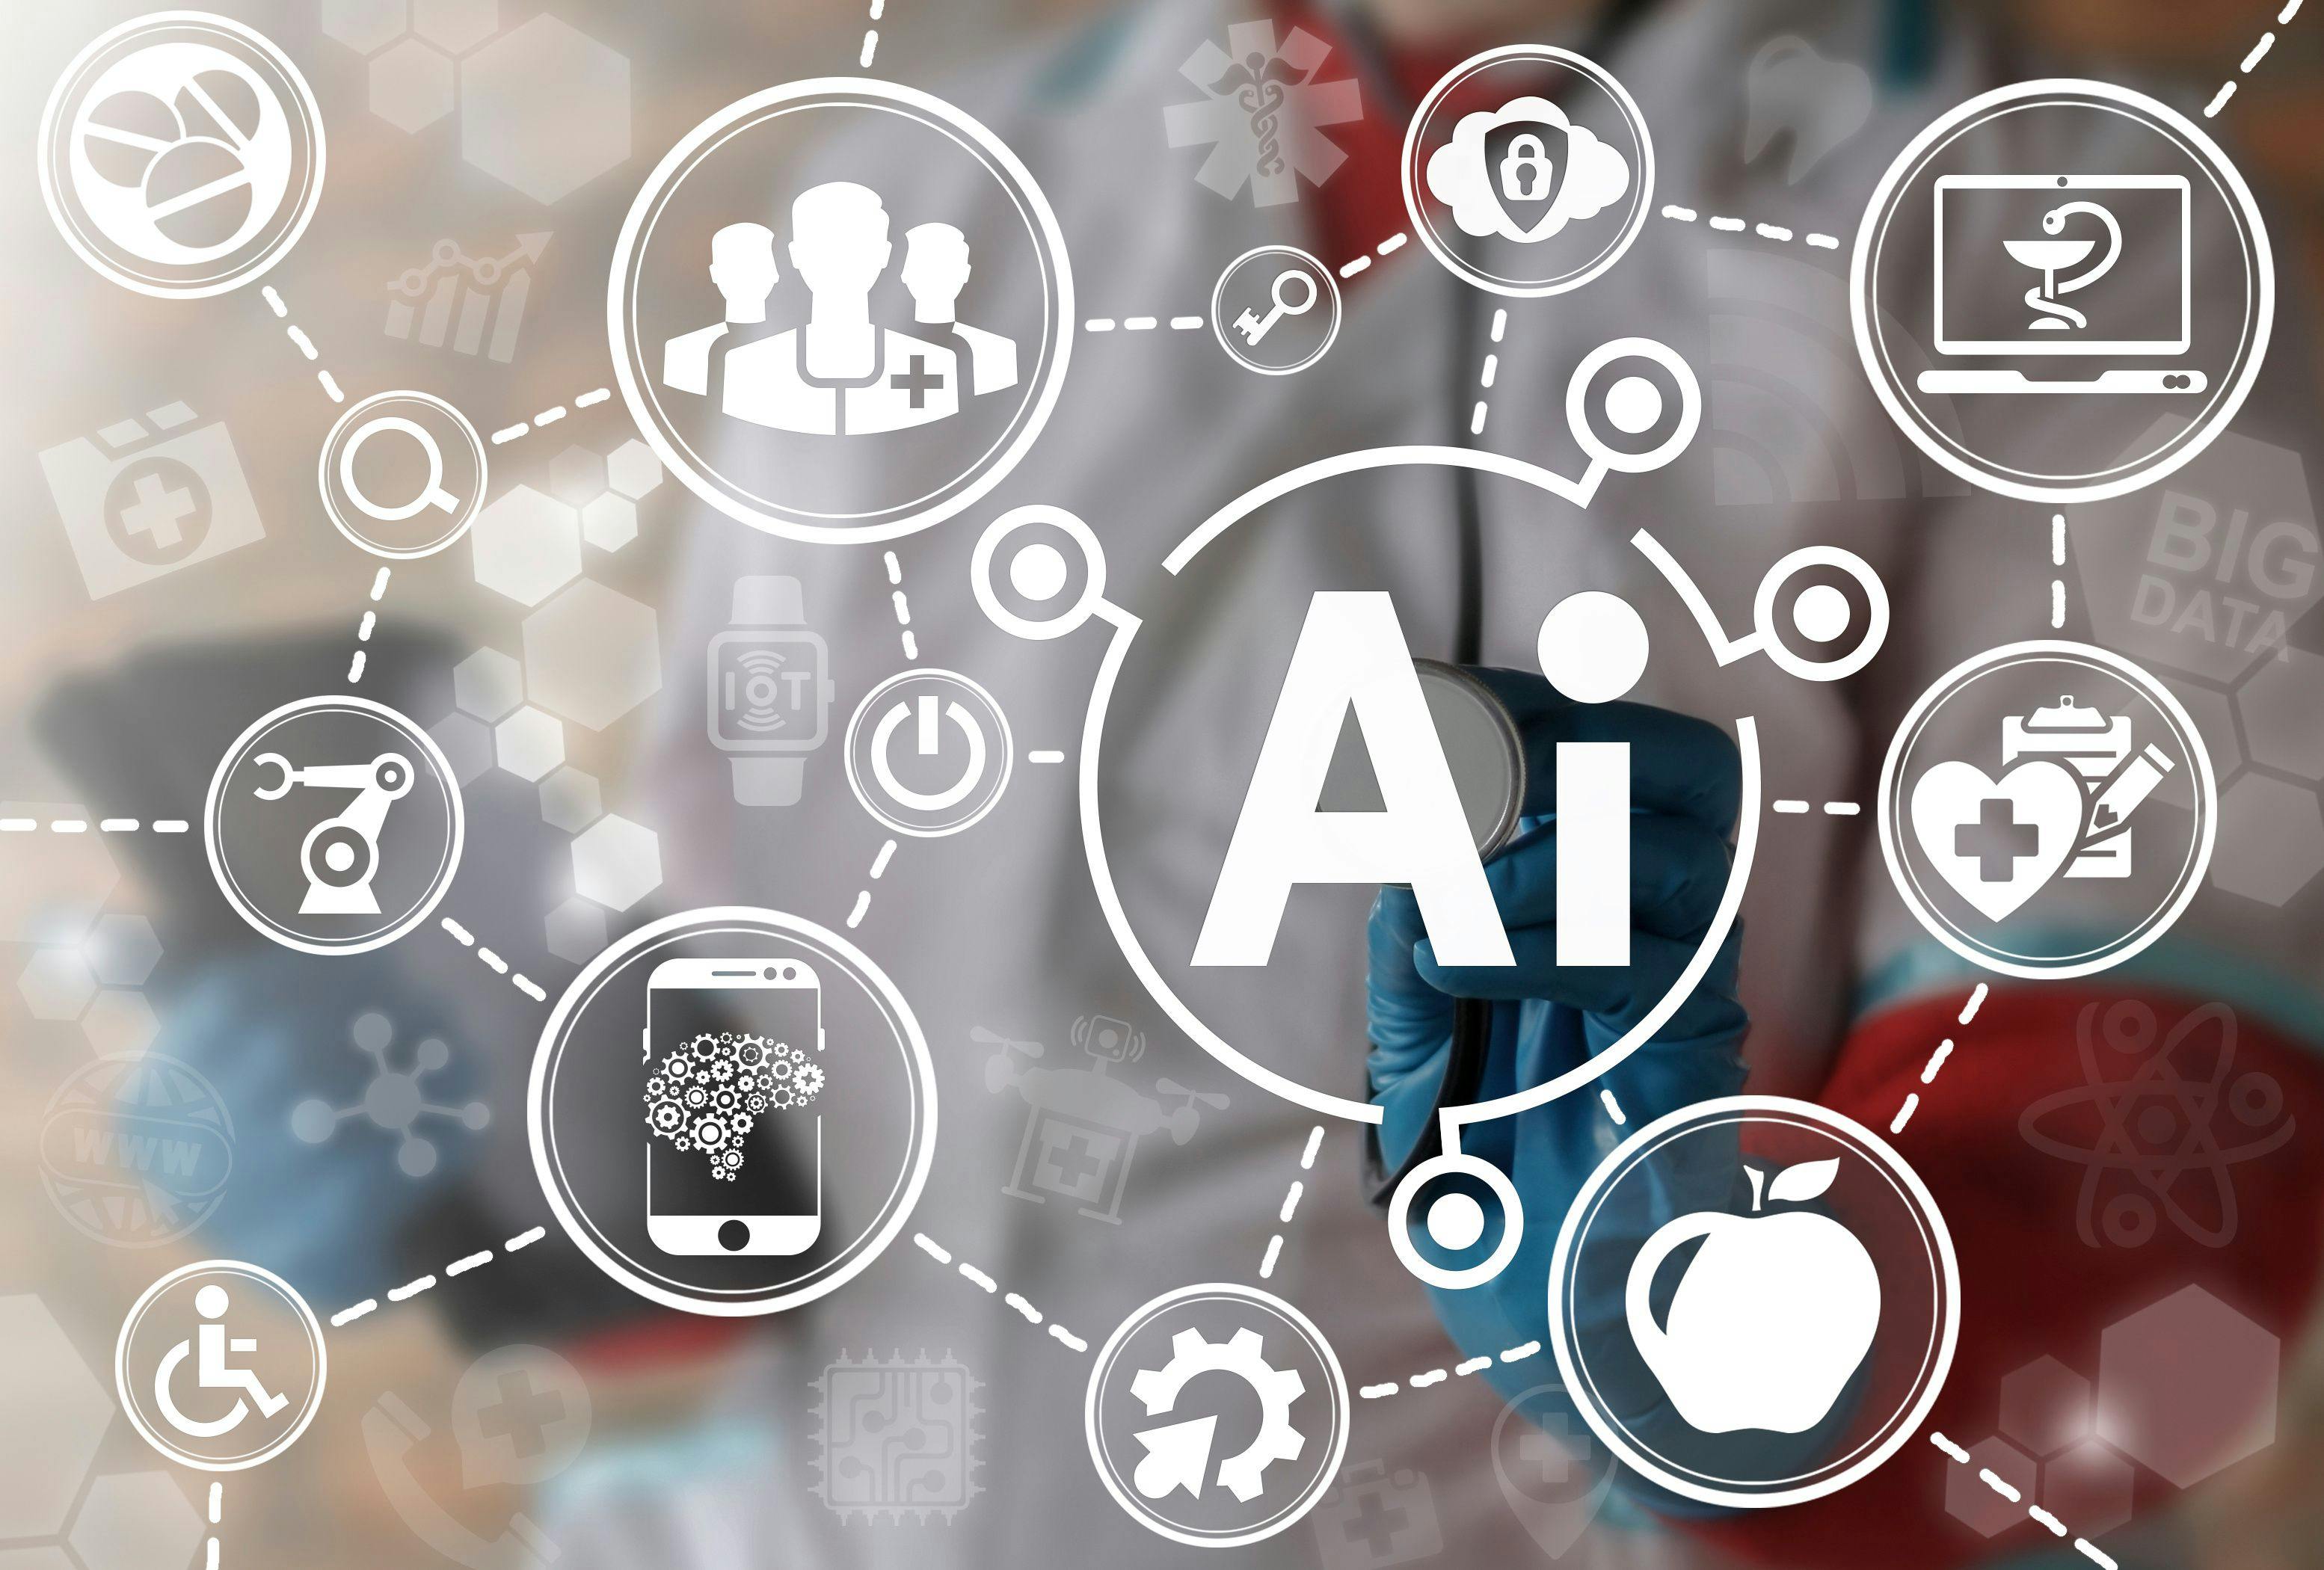 AI in health care: ©Wladimir1804 - stock.adobe.com